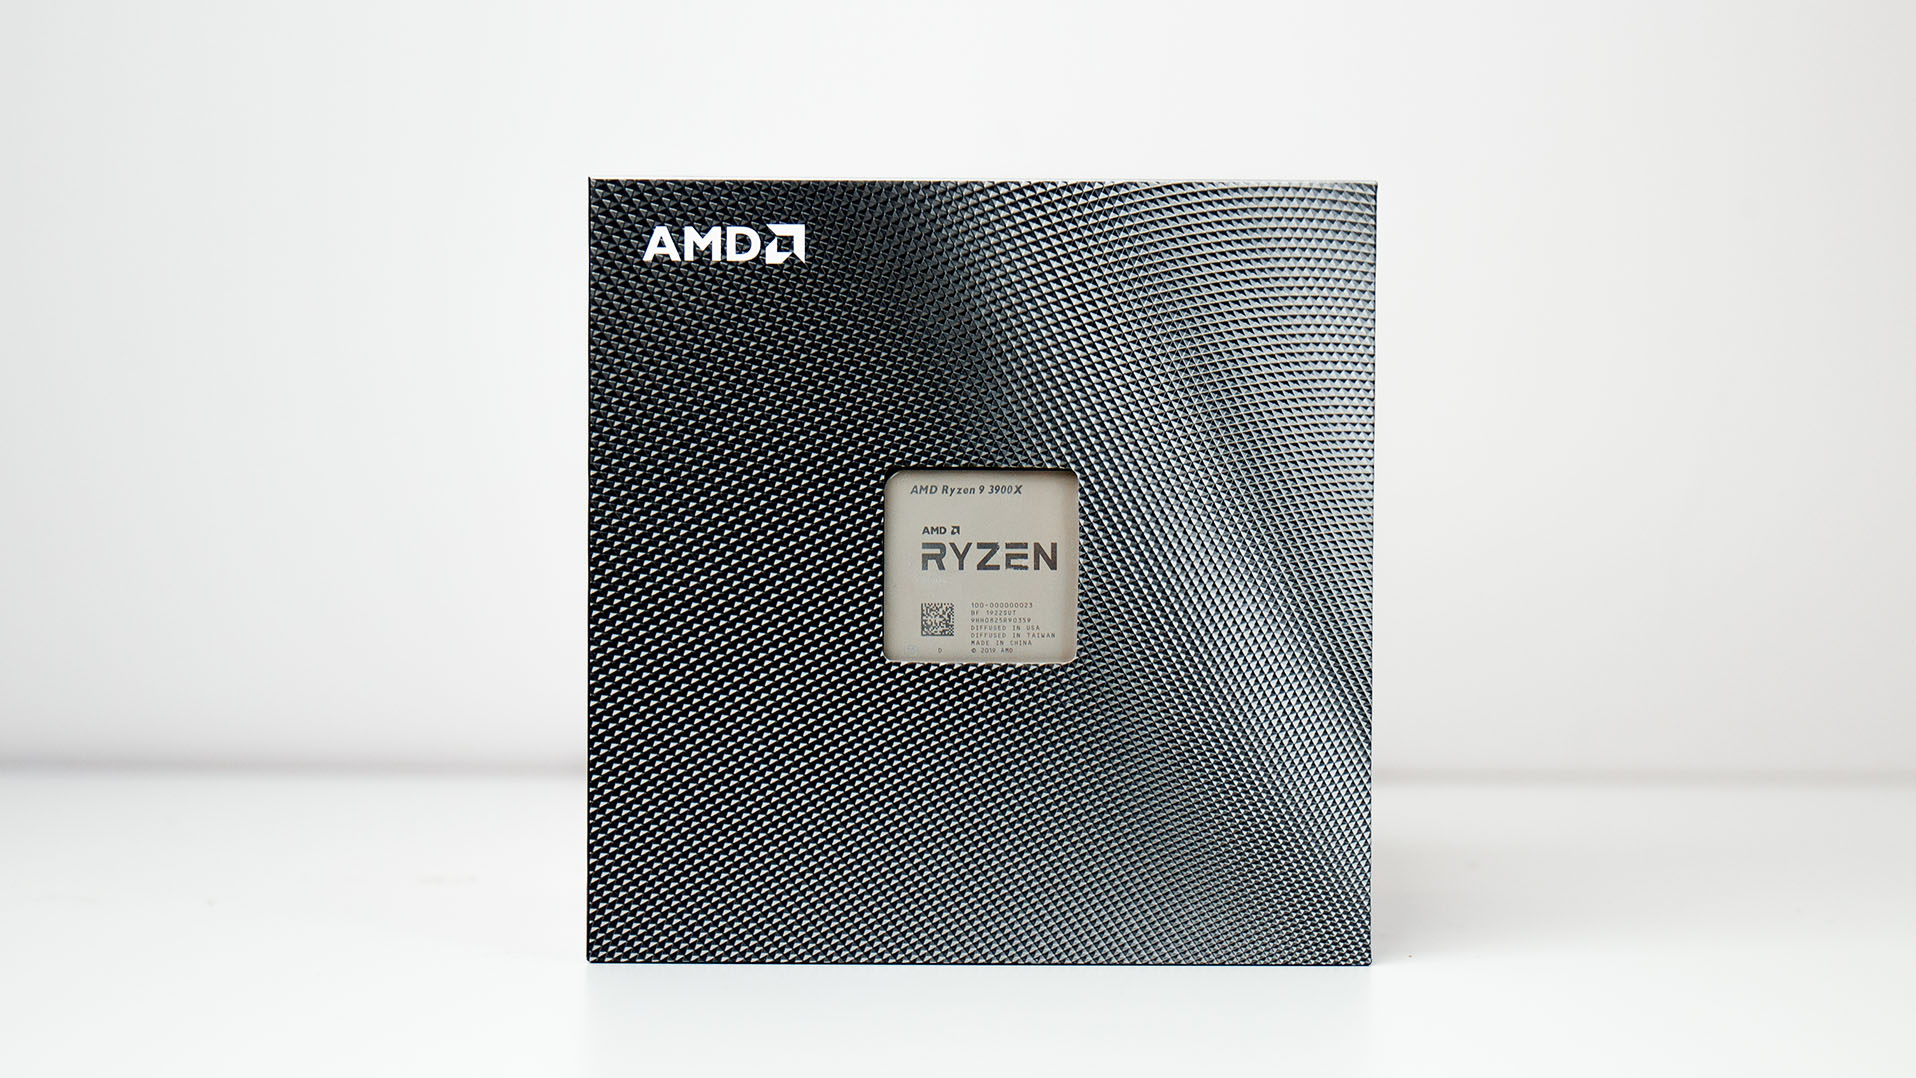 AMD Ryzen 9 3900X review: taking down Intel's ultra-enthusiast 